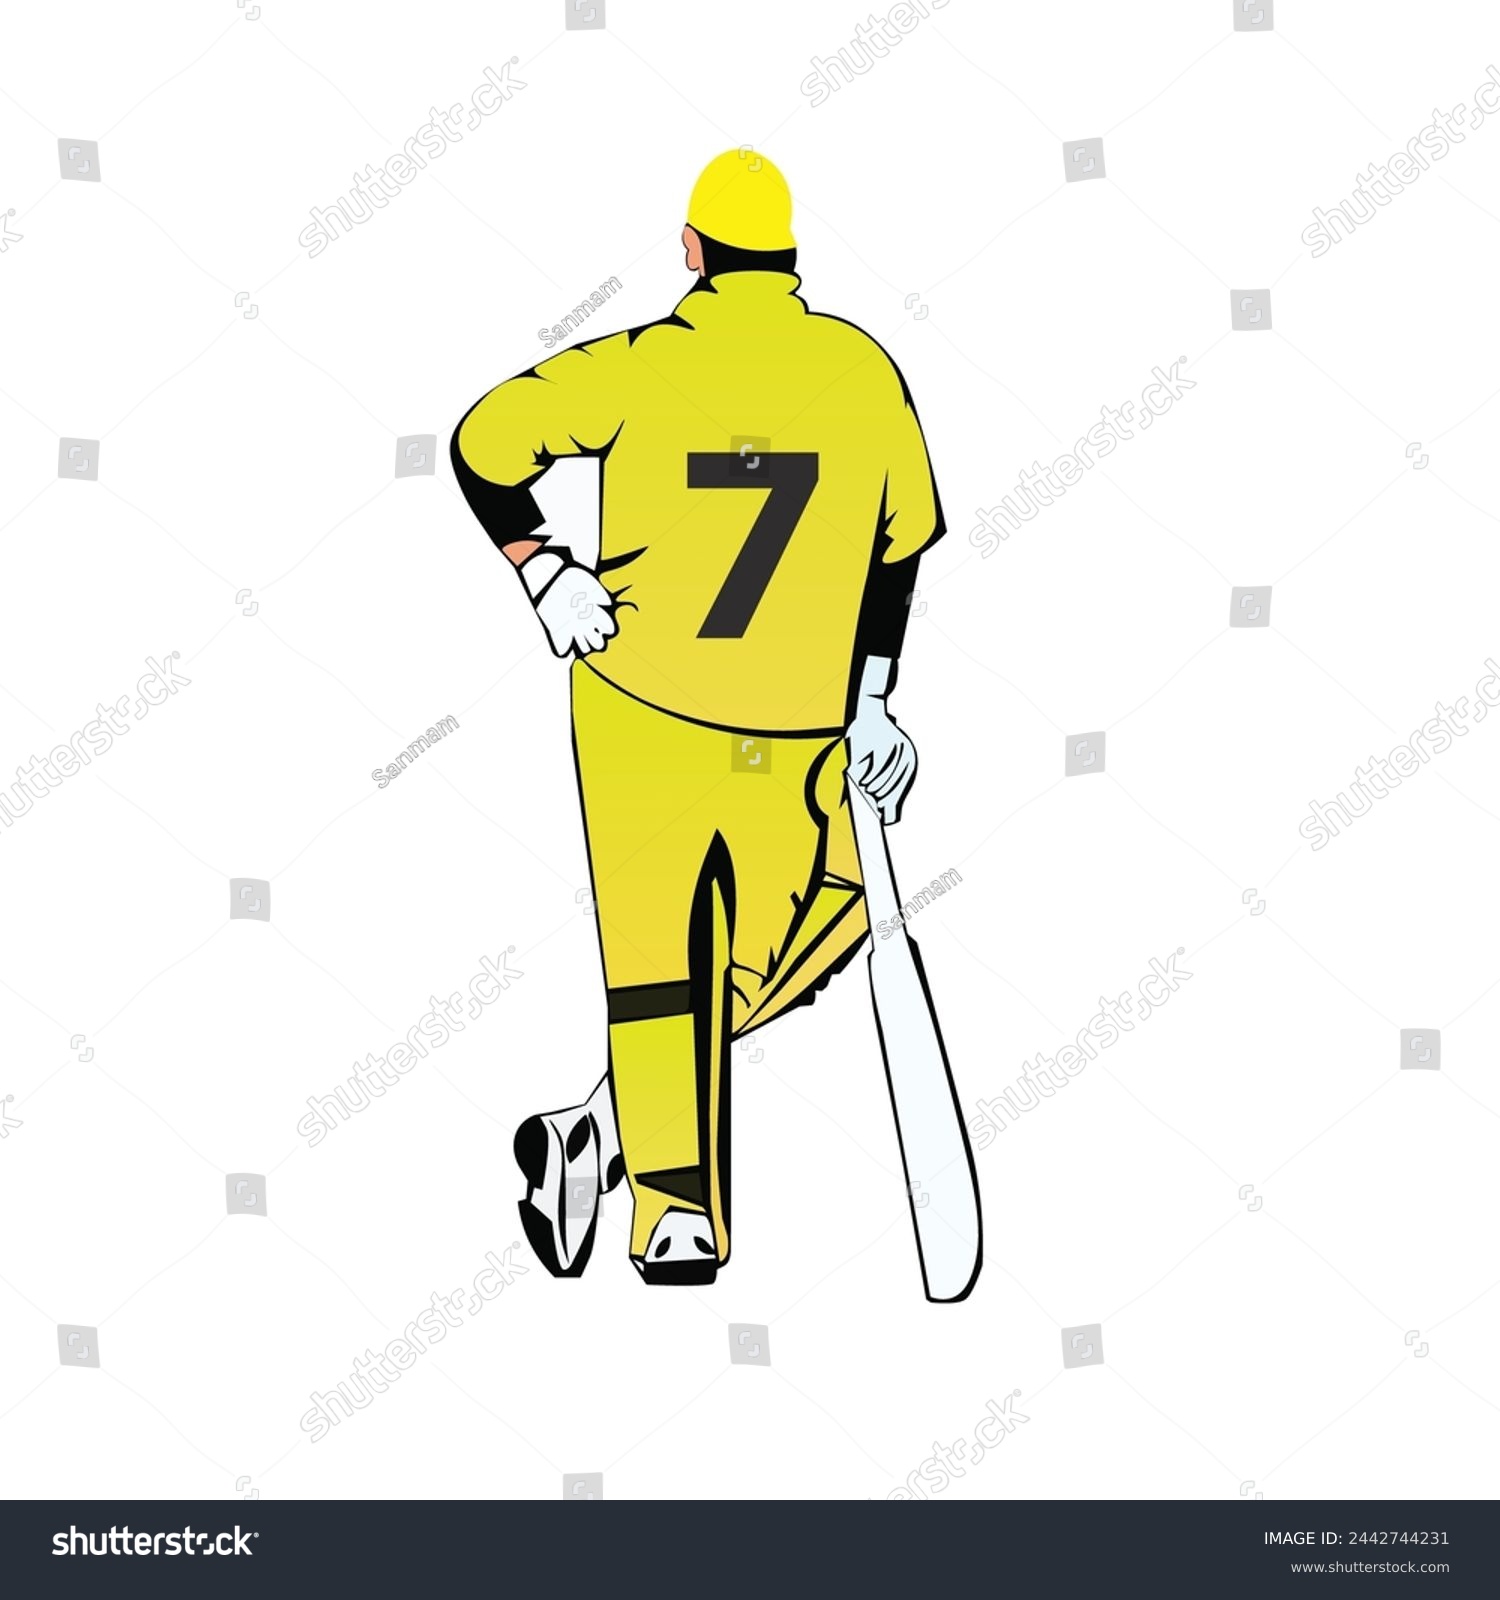 SVG of Yellow jersey cricket player Indian cricketer ipl cricket batsmen csk player svg